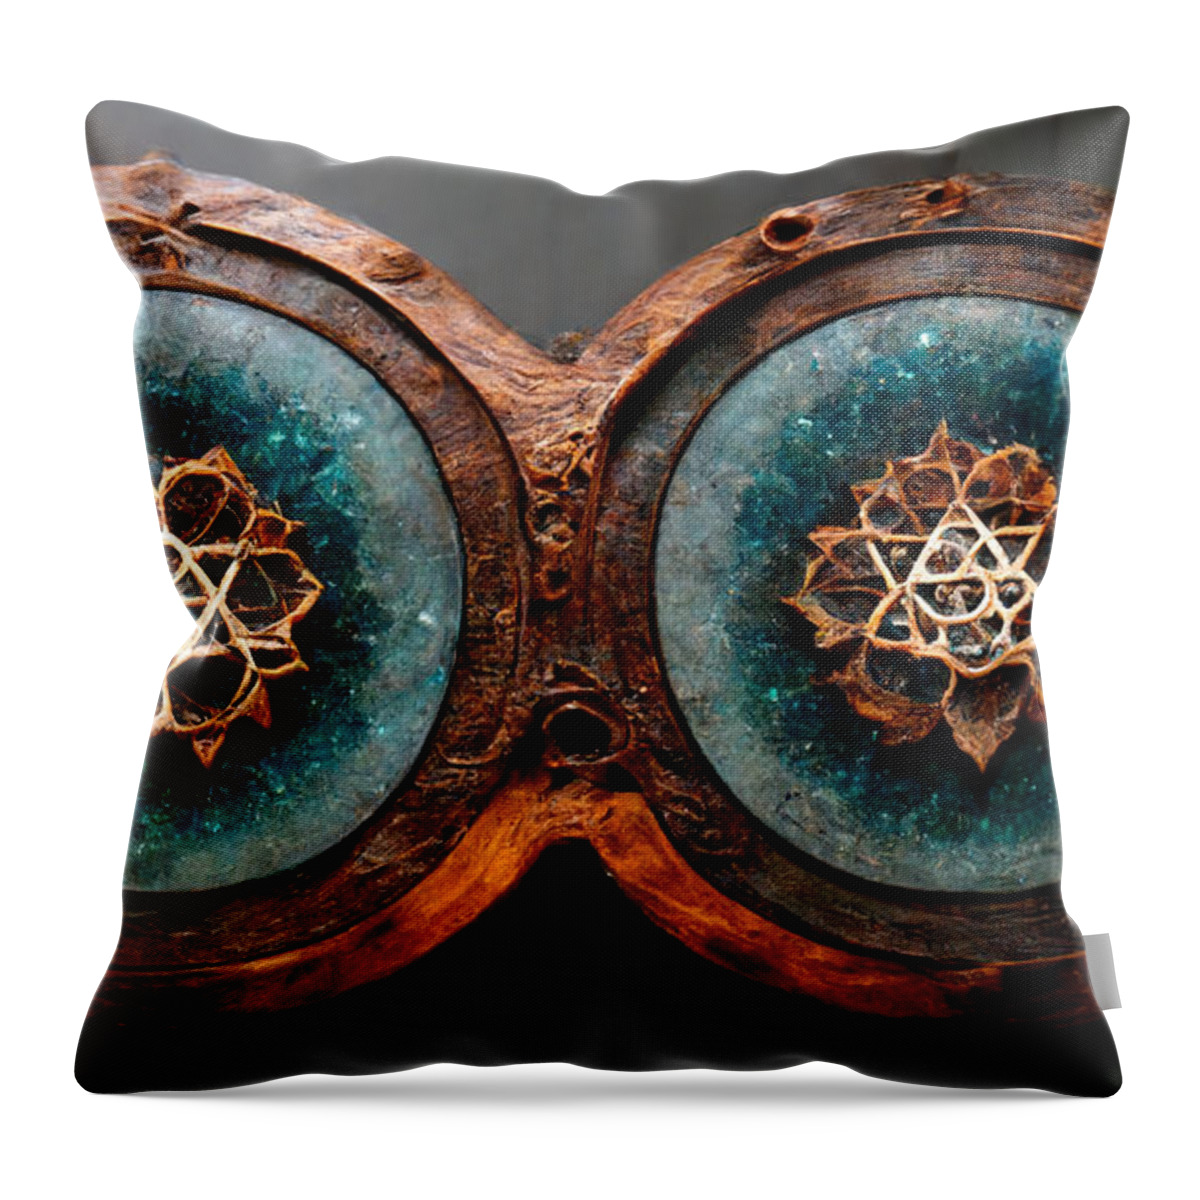 Steampunk Throw Pillow featuring the digital art Steampunk mandala #2 by Sabantha